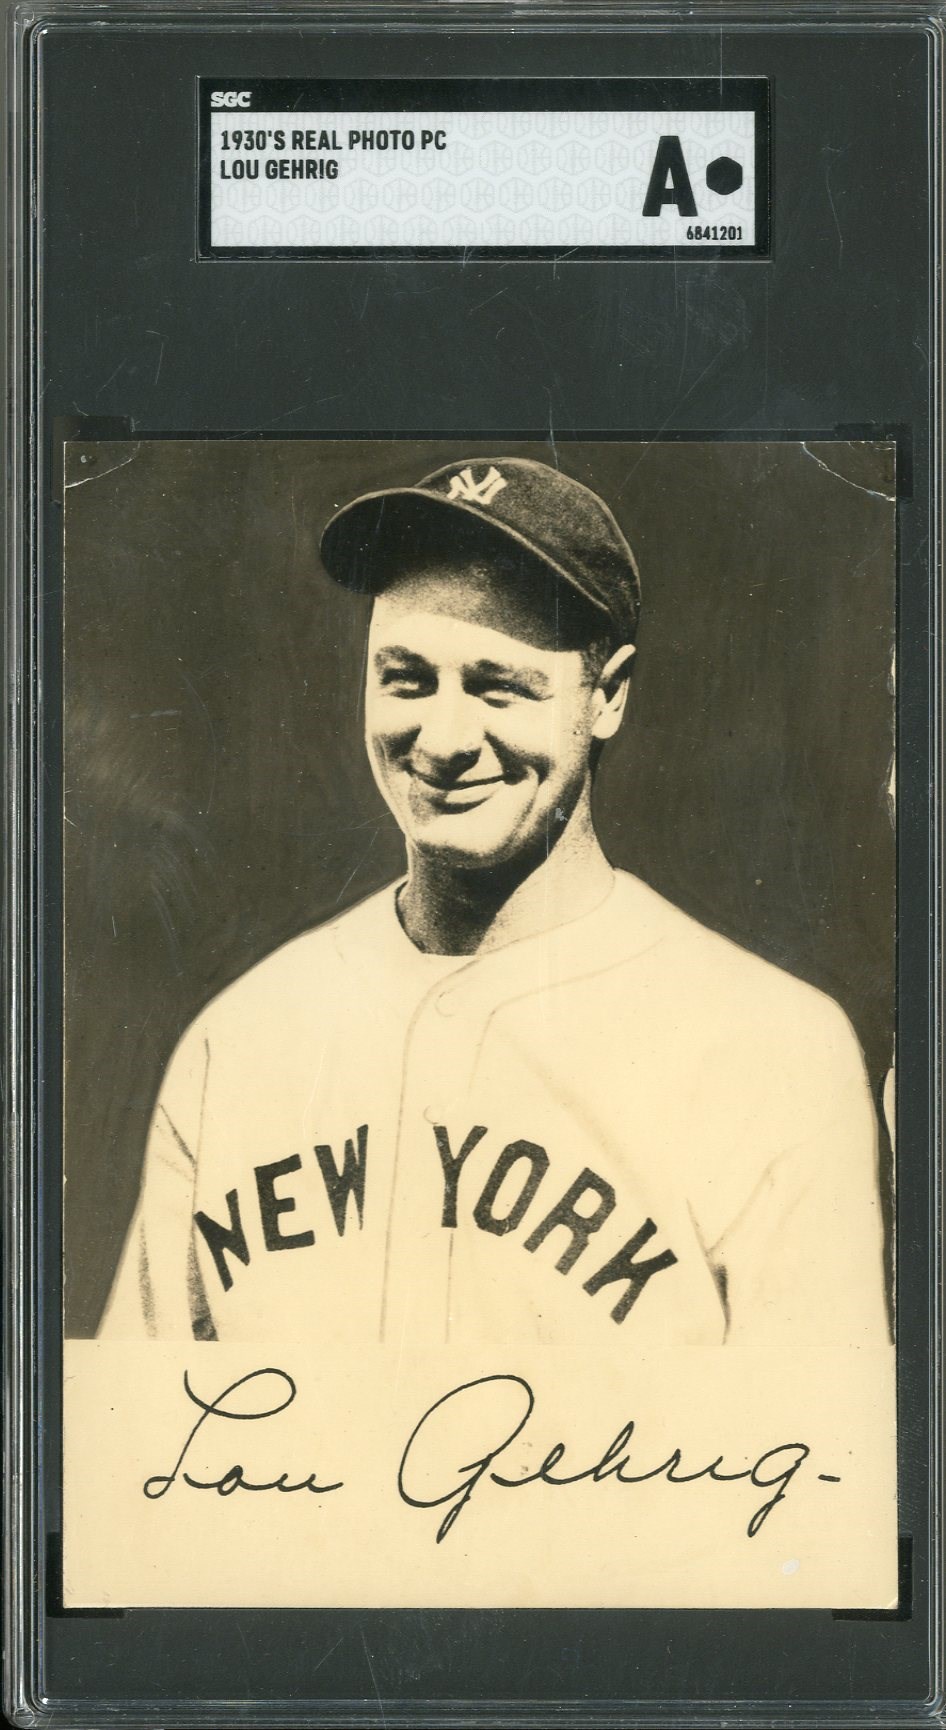 - Rare 1930's Lou Gehrig Real Photo Postcard (SGC)